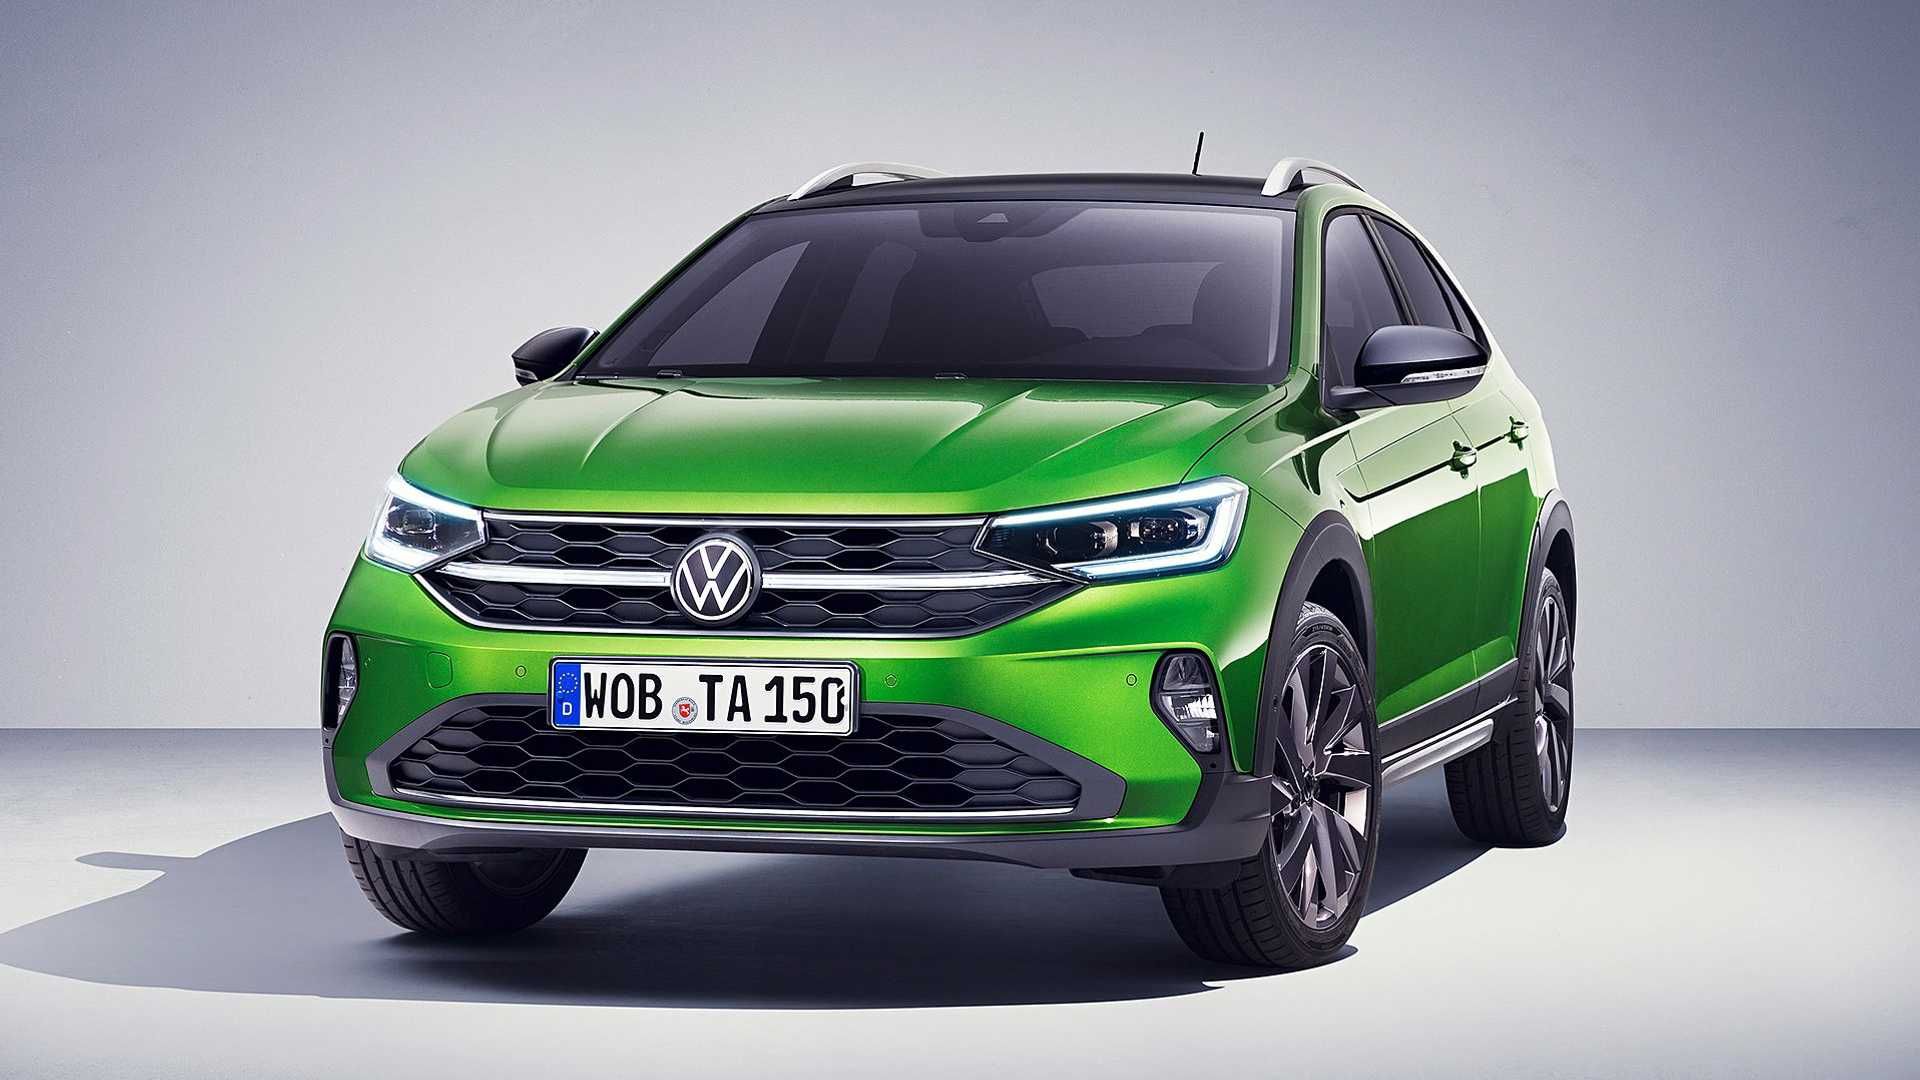 2022 Volkswagen Taigo Crossover / کراس اور فولکس واگن تایگو سبز رنگ